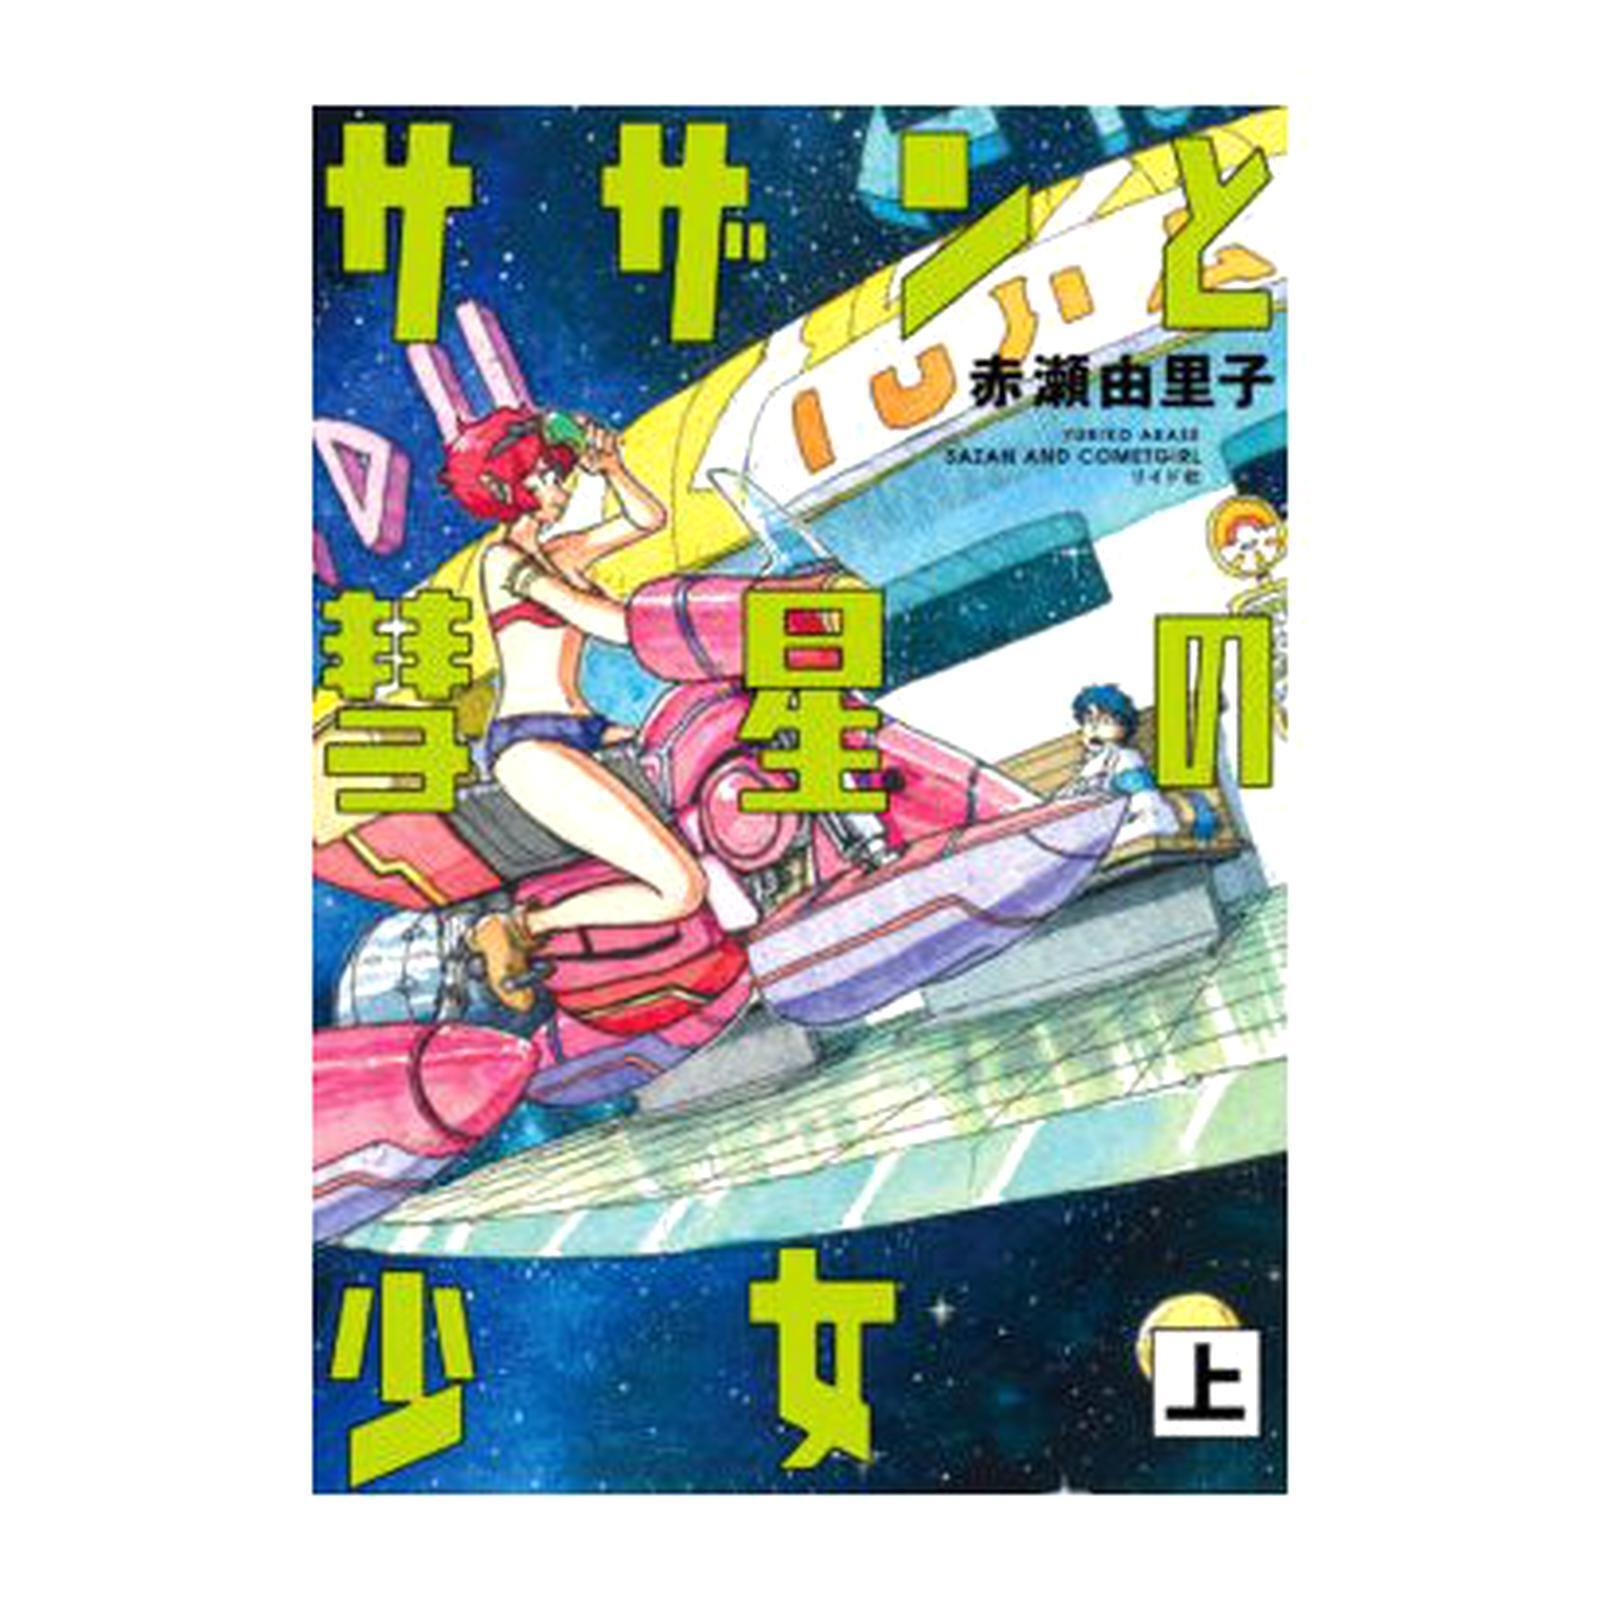 Sazan & Comet Girl (Language:Japanese) Manga Comic From Japan